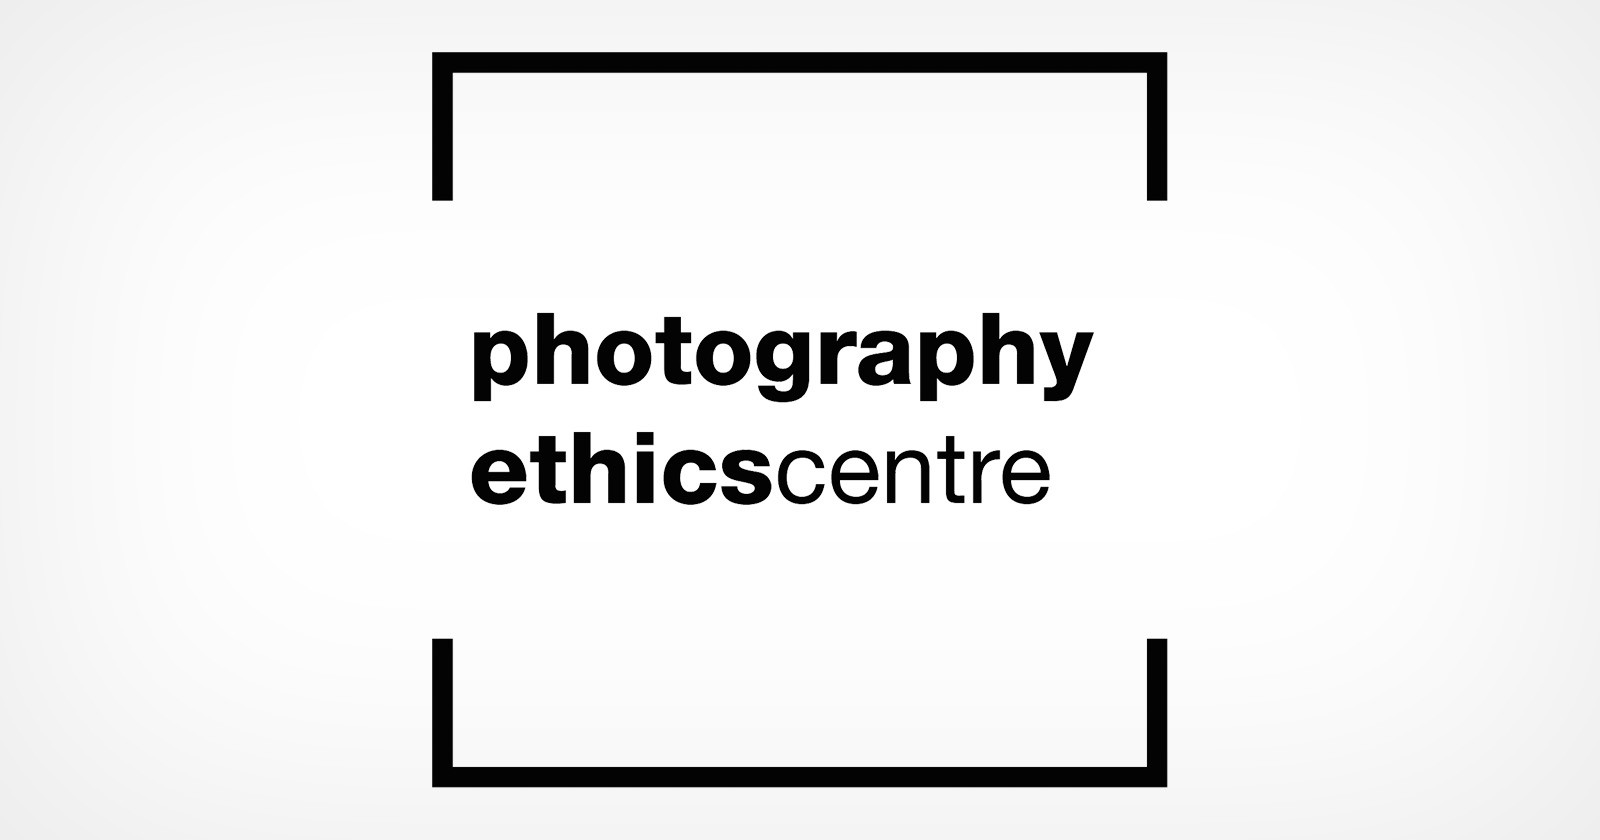  ethics photographers all 